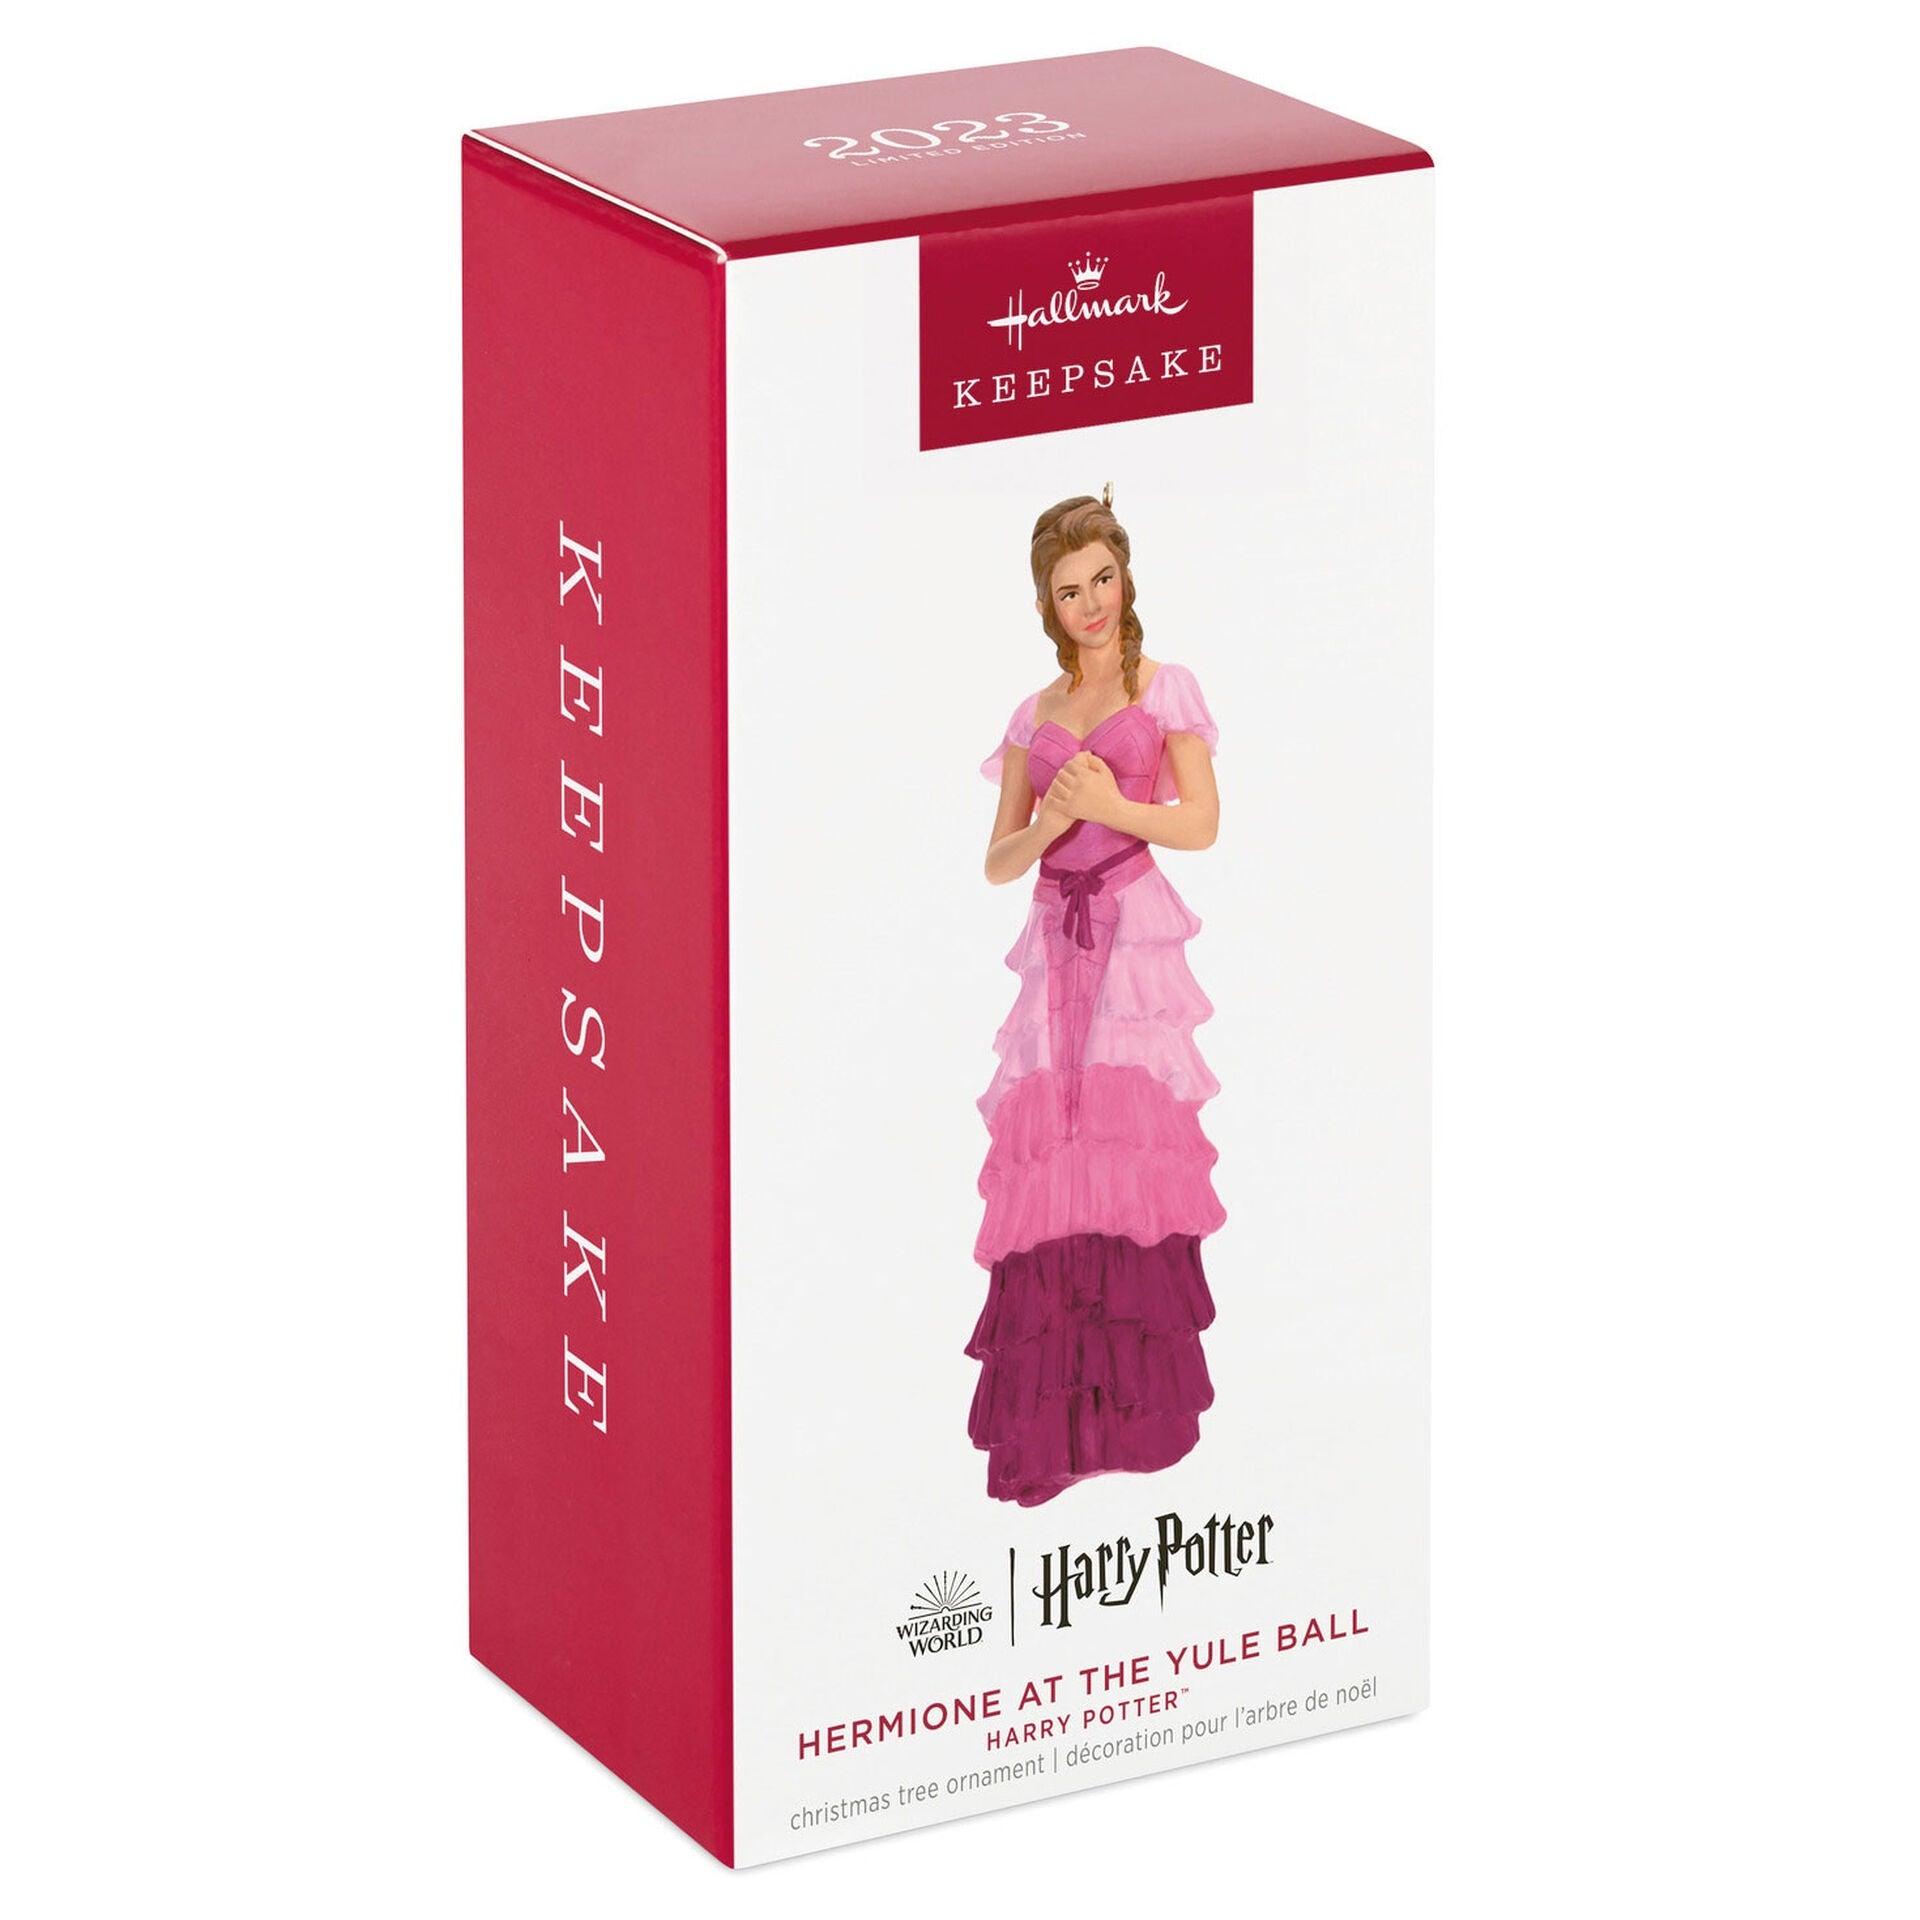 Harry Potter™ Deathly Hallows™ Letter Holder - Desk Accessories - Hallmark